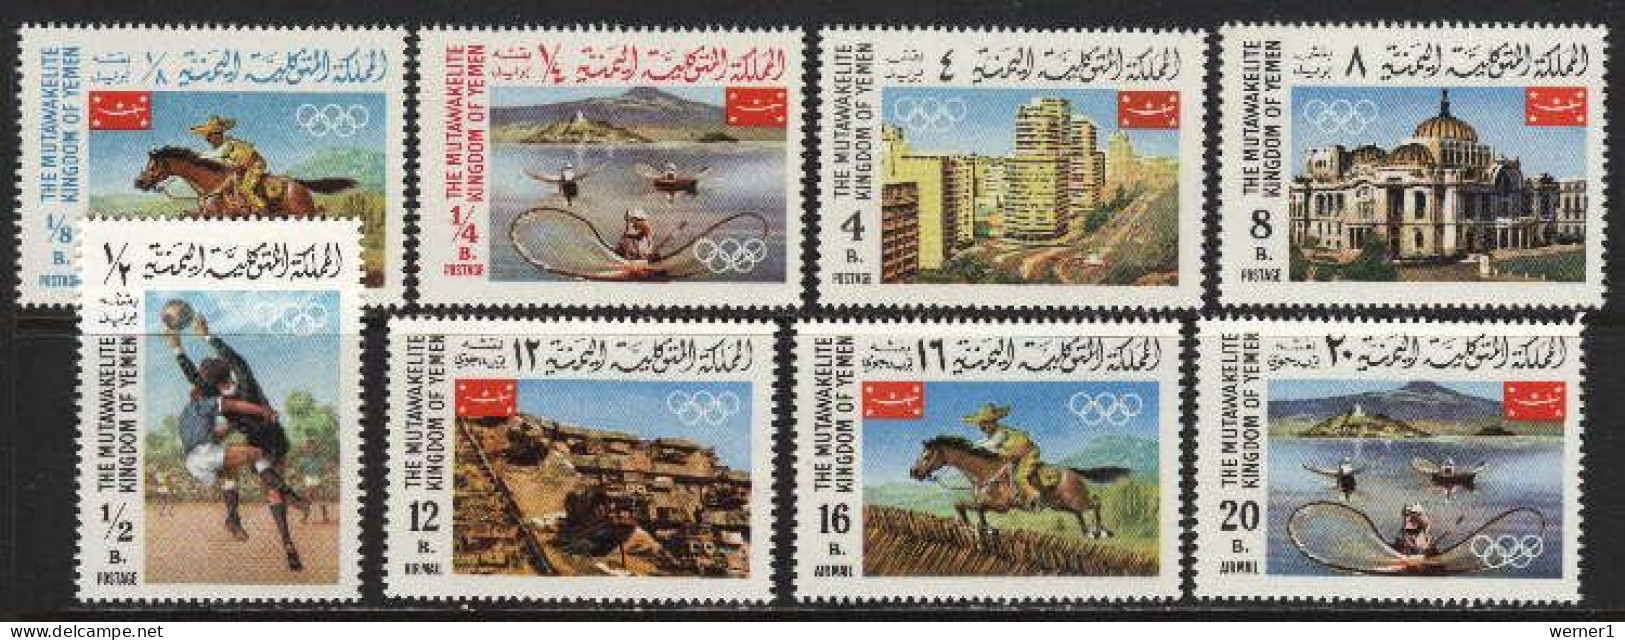 Yemen Kingdom 1967 Olympic Games Mexico Set Of 8 MNH - Summer 1968: Mexico City